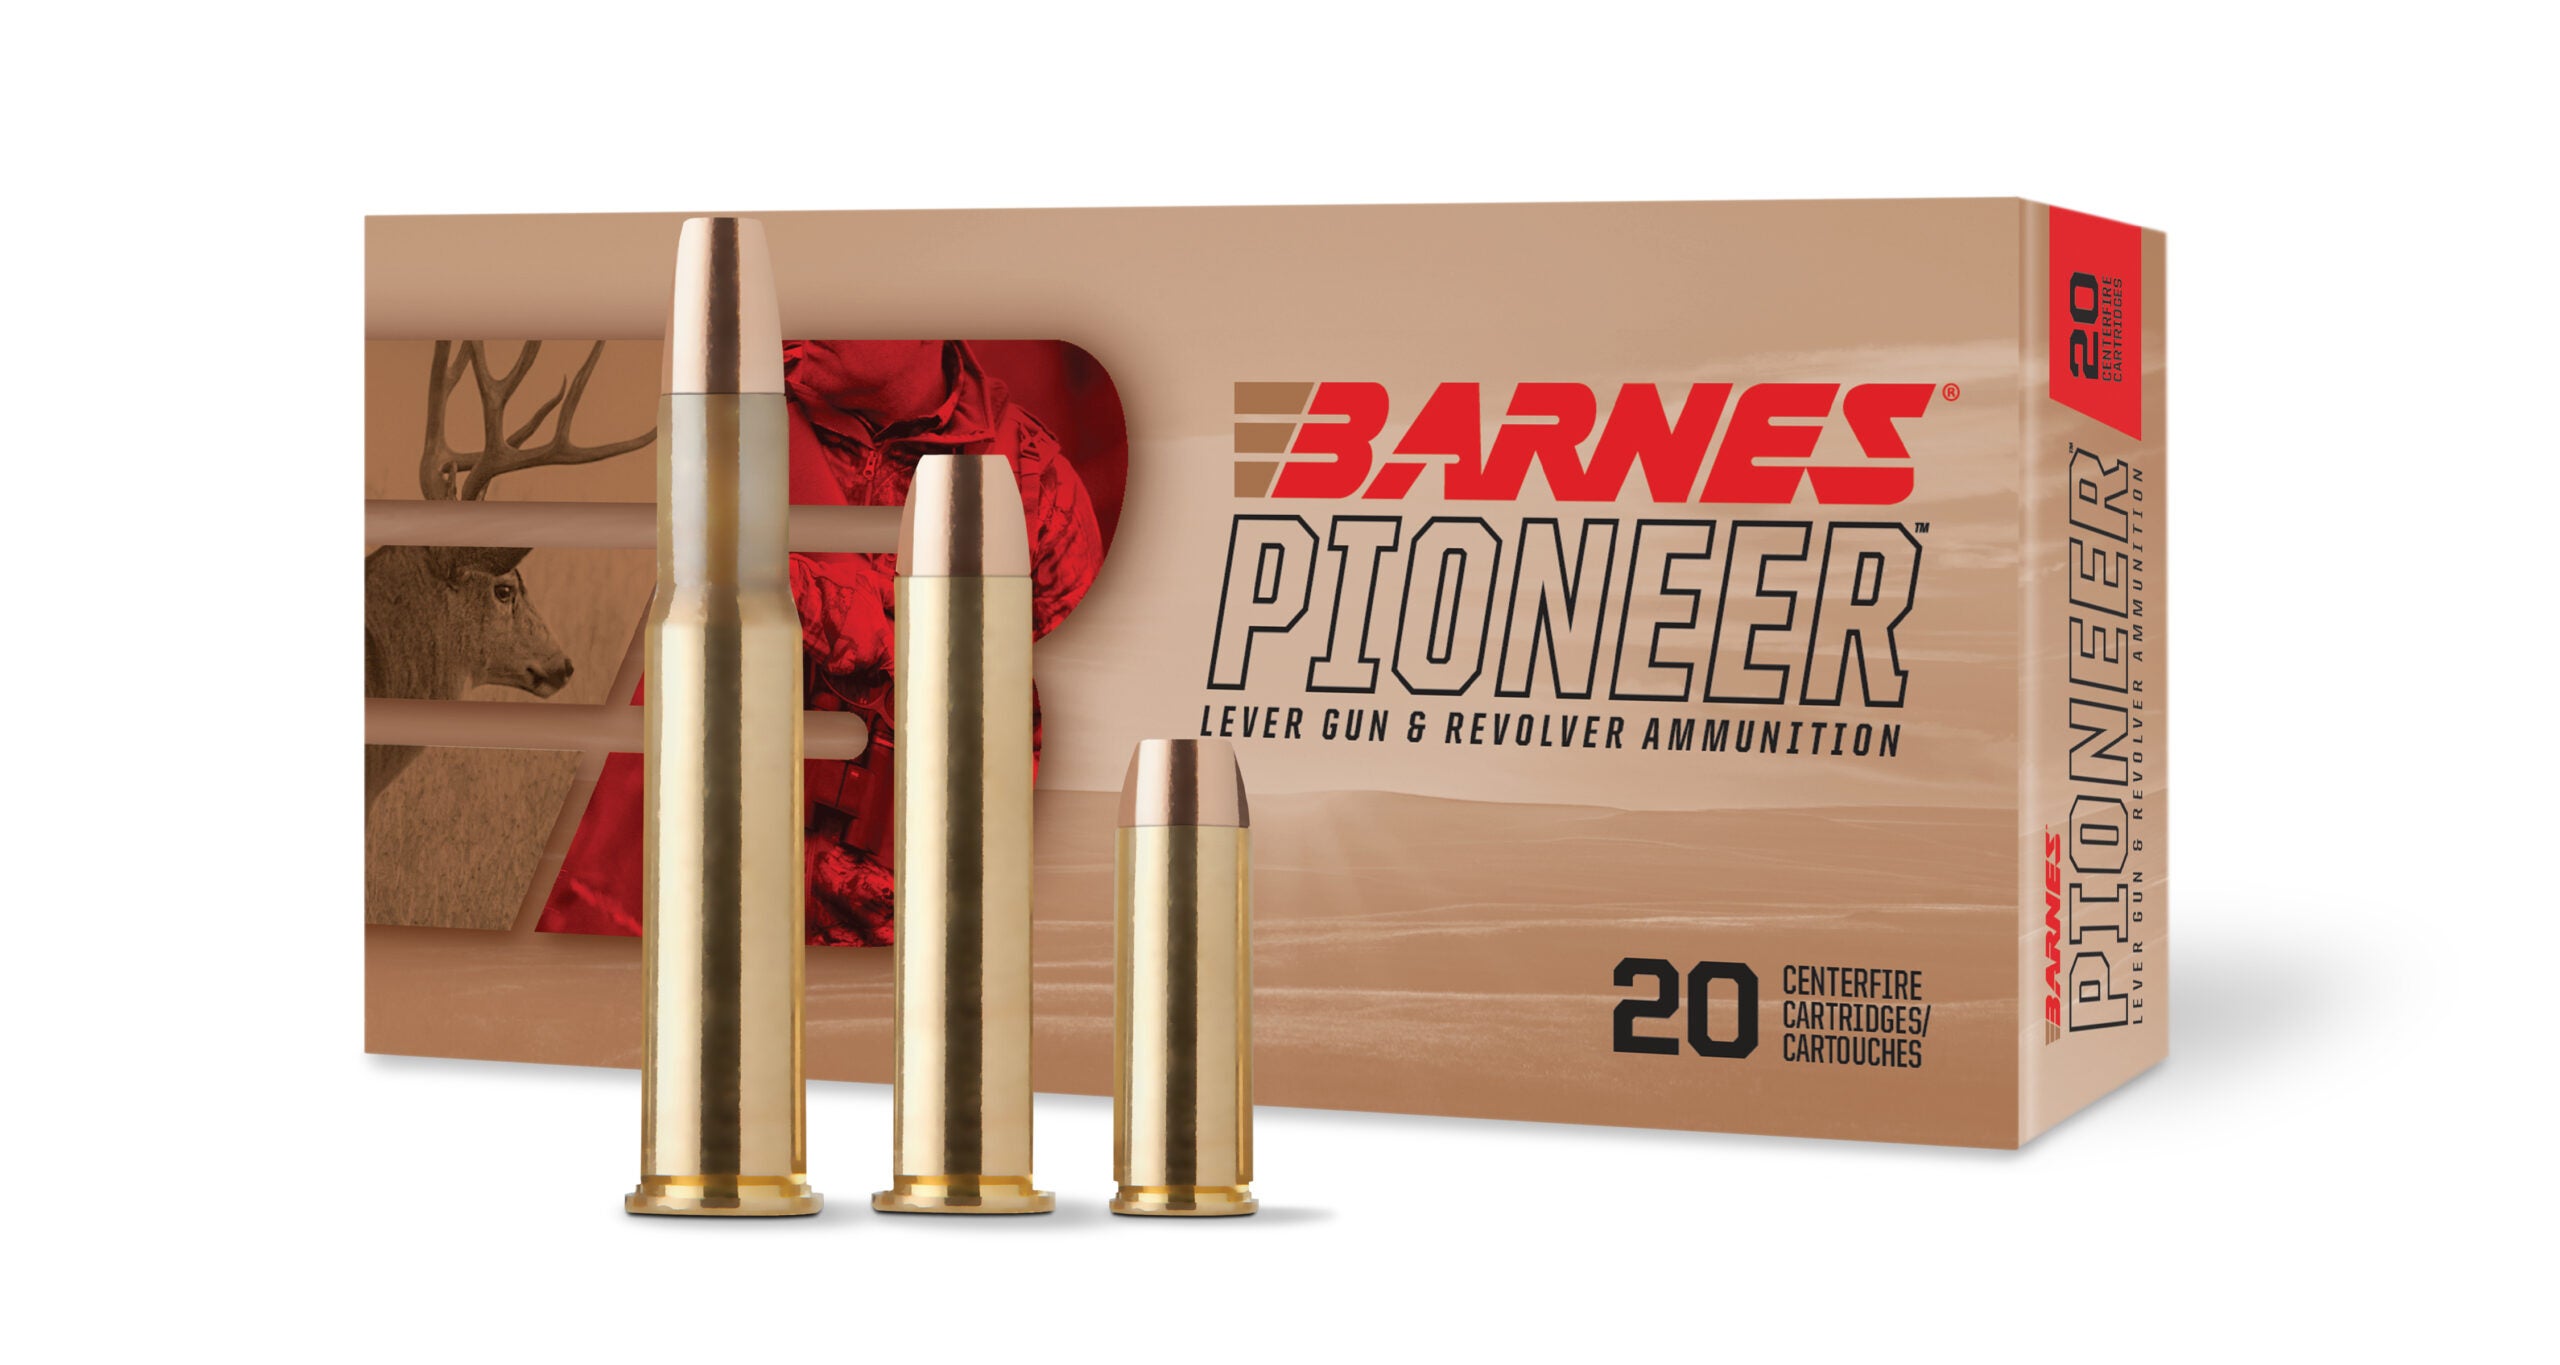 Barnes Pioneer ammo. 